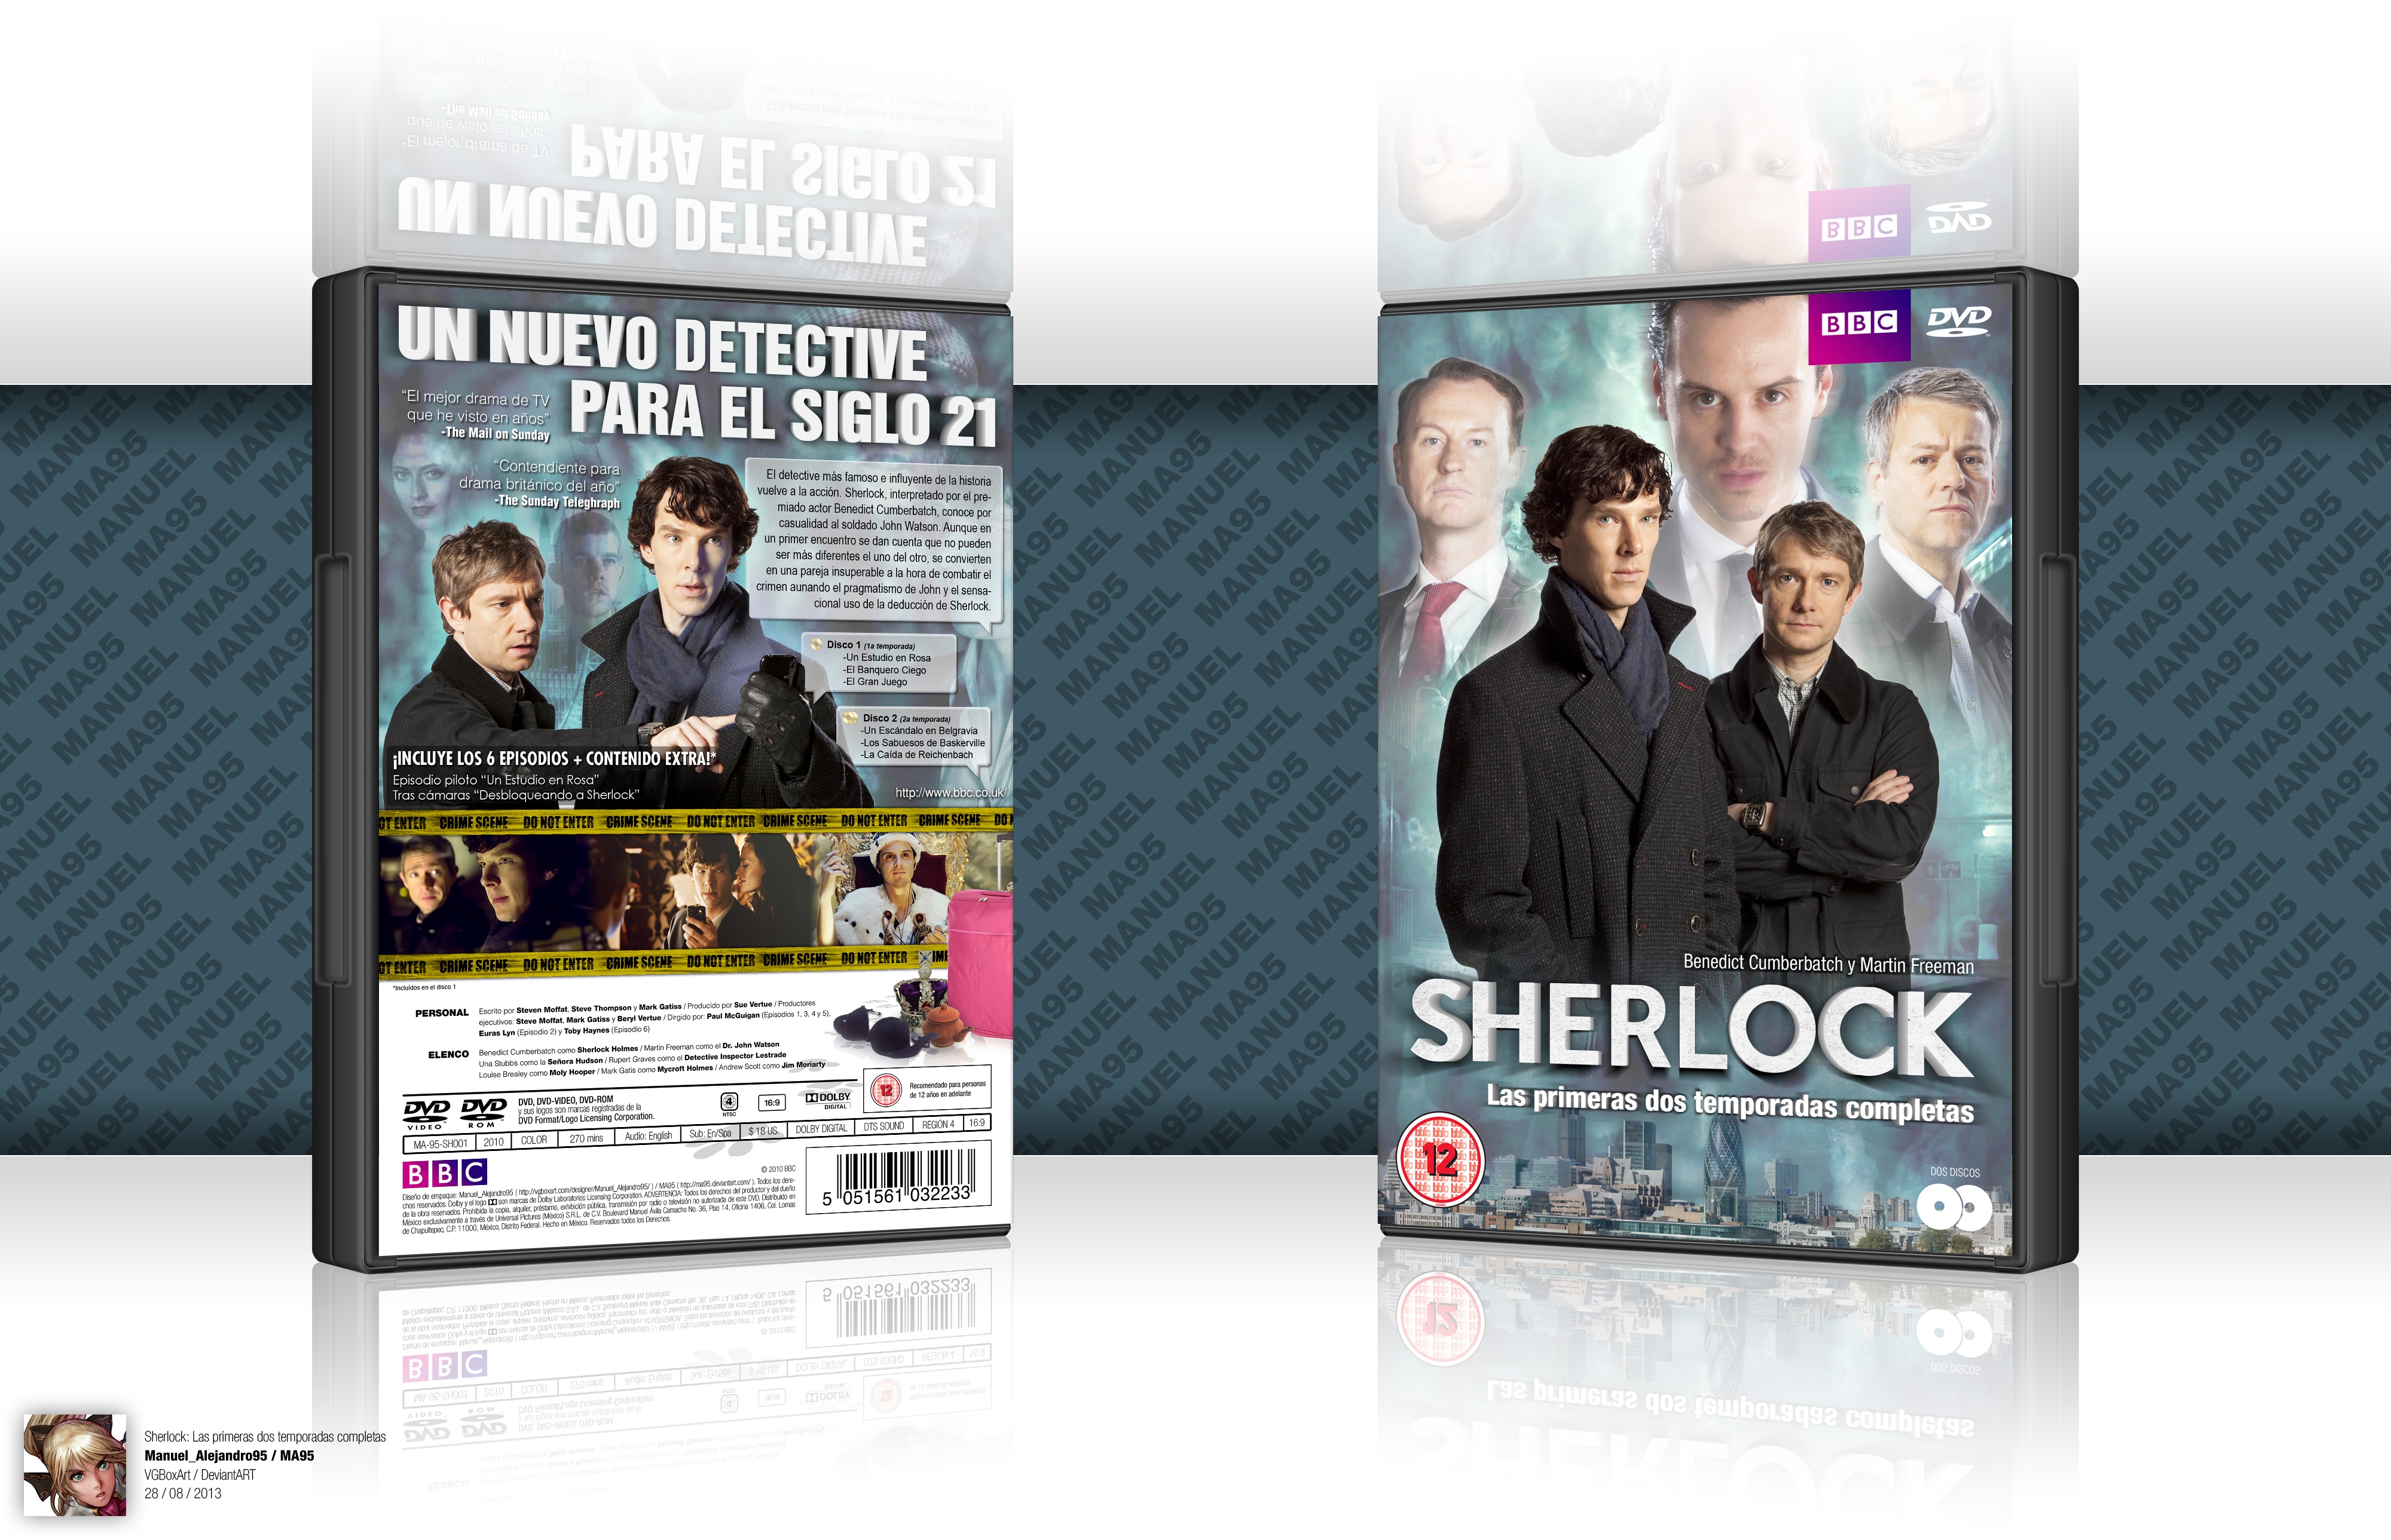 Sherlock box cover